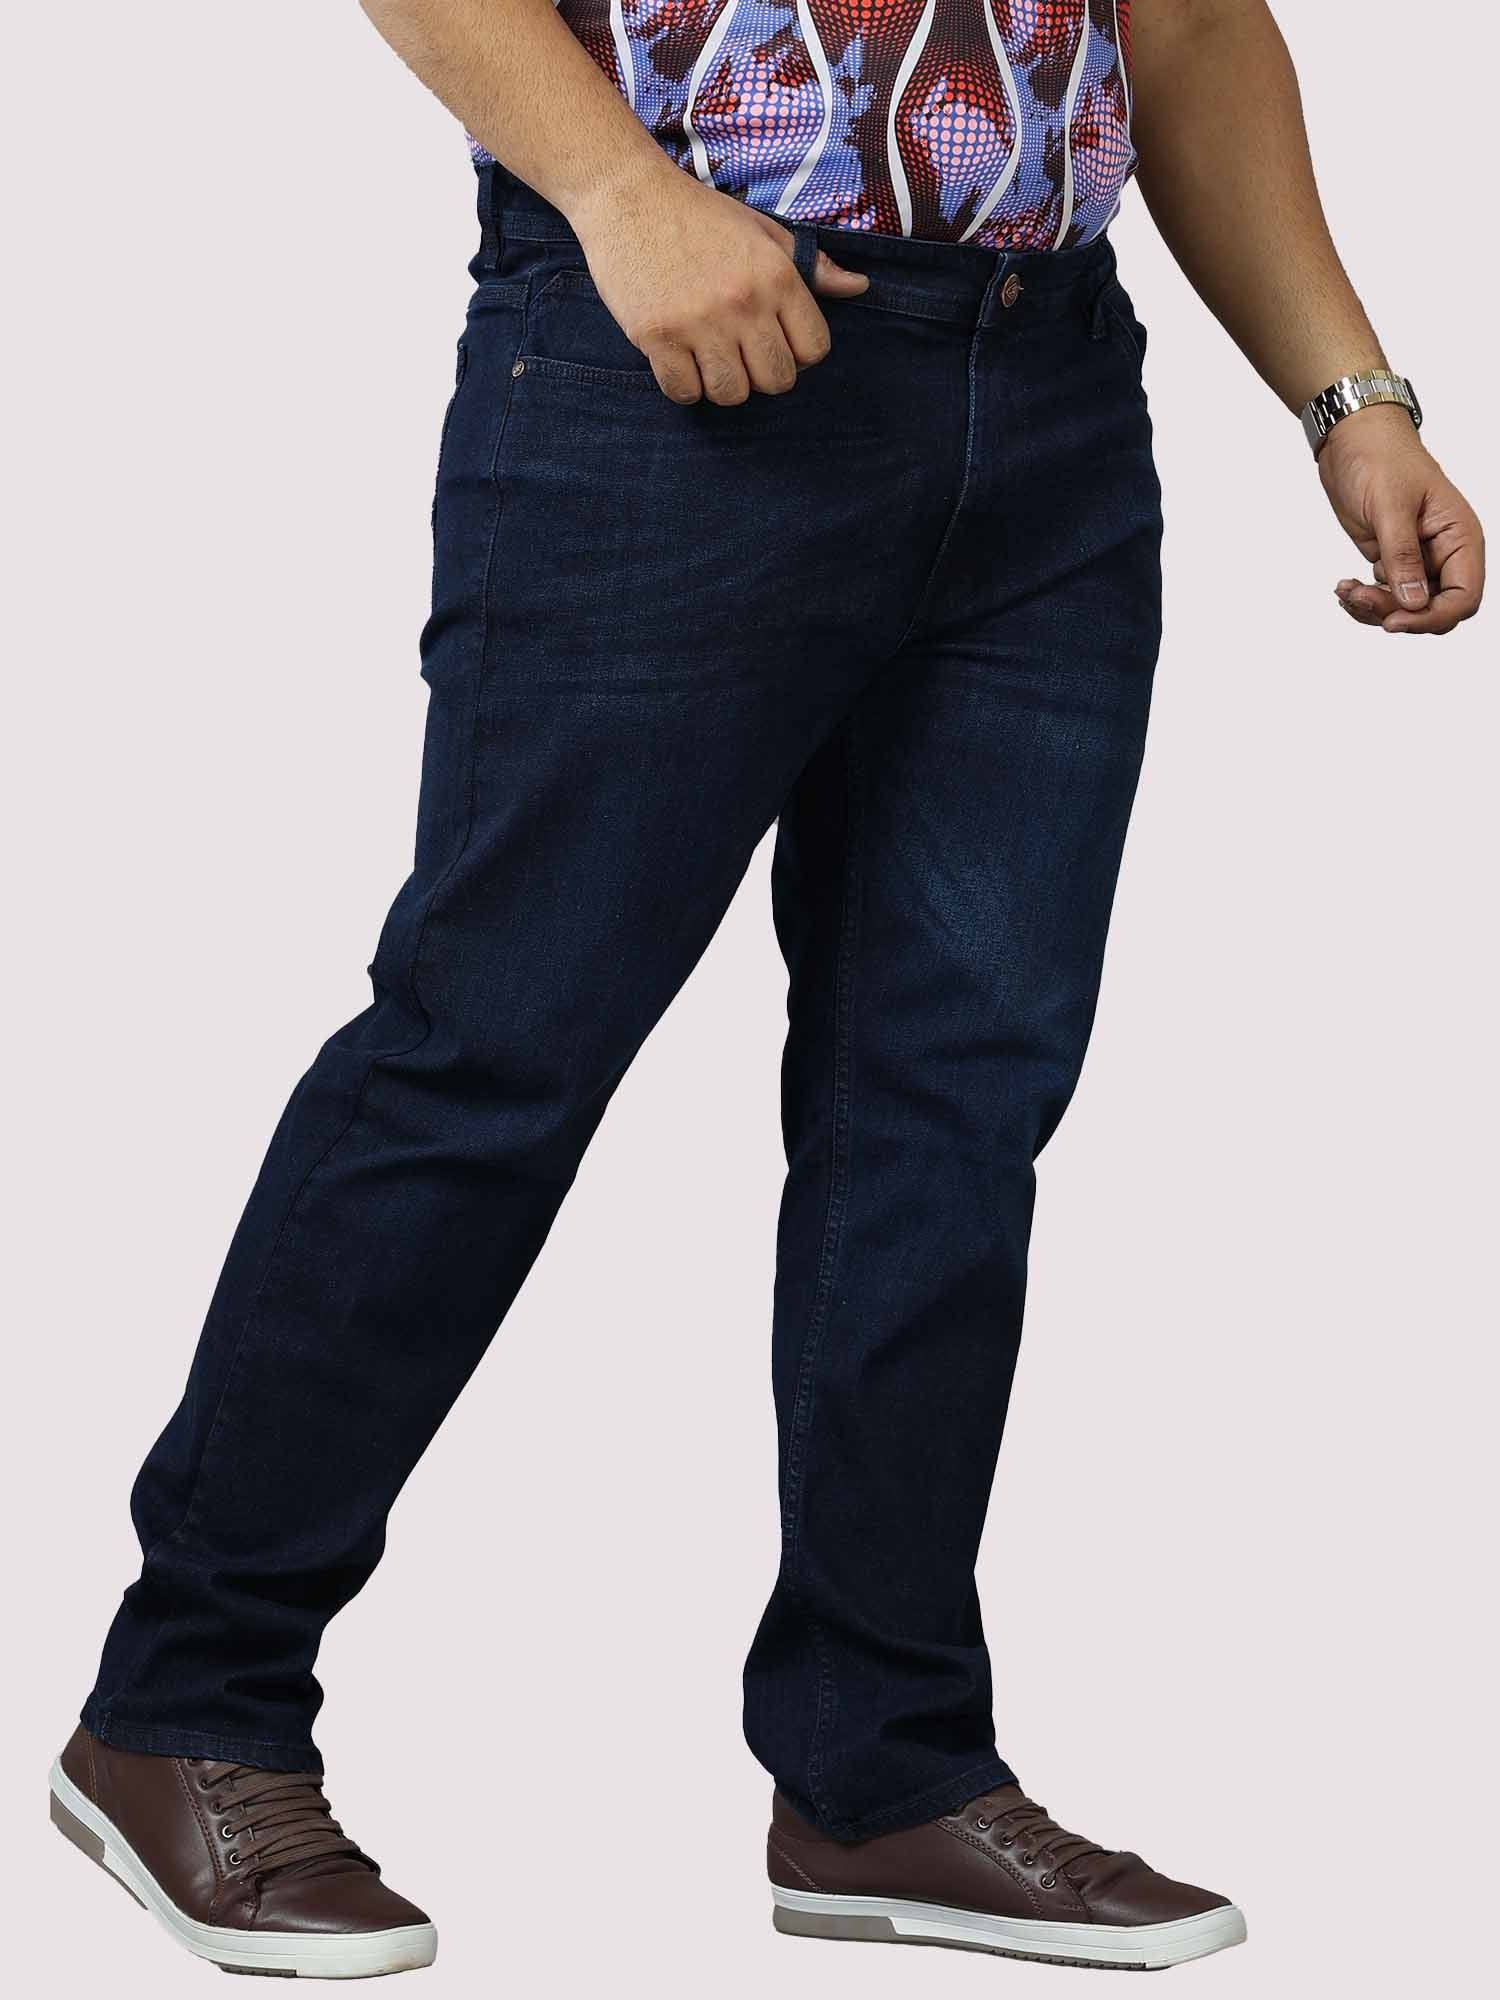 Deep Blue Stretchable Jeans Men's Plus Size - Guniaa Fashions